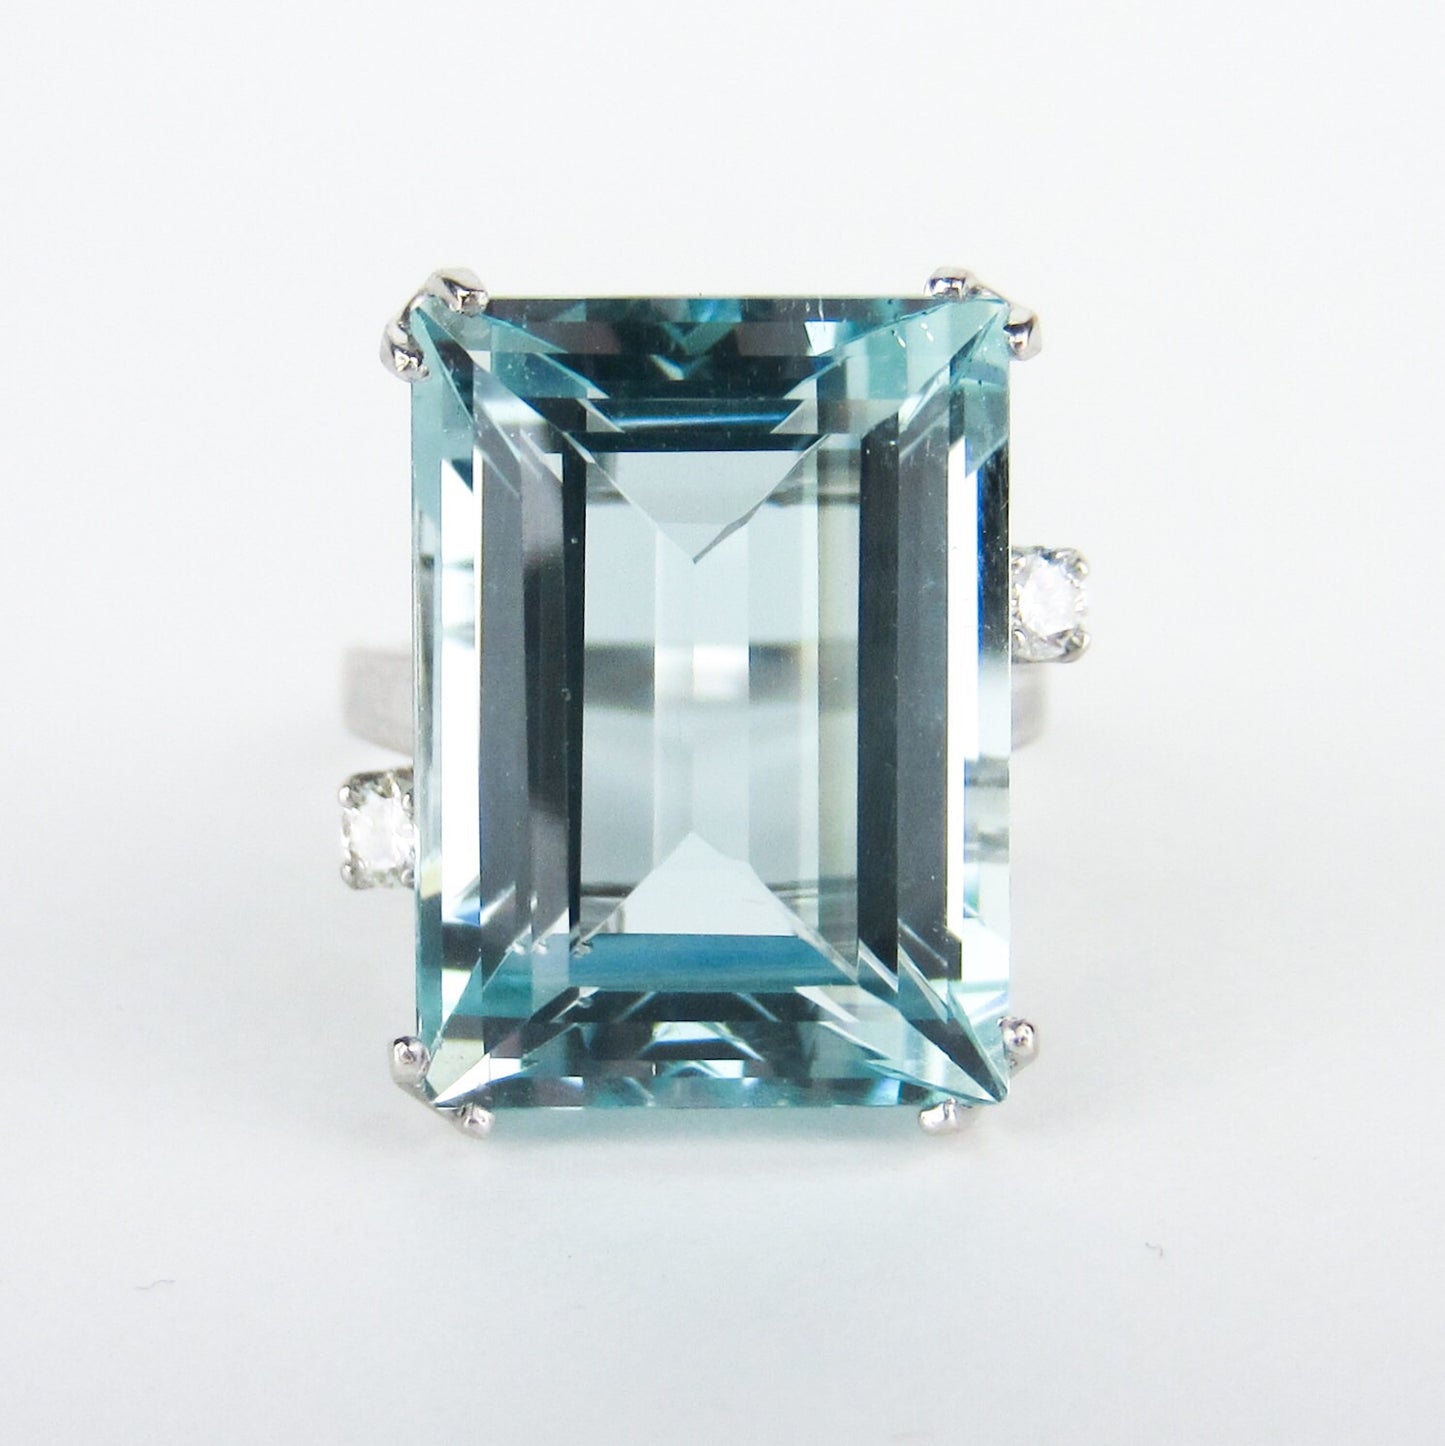 SOLD--Vintage Aquamarine and Diamond Ring 14k c. 1960